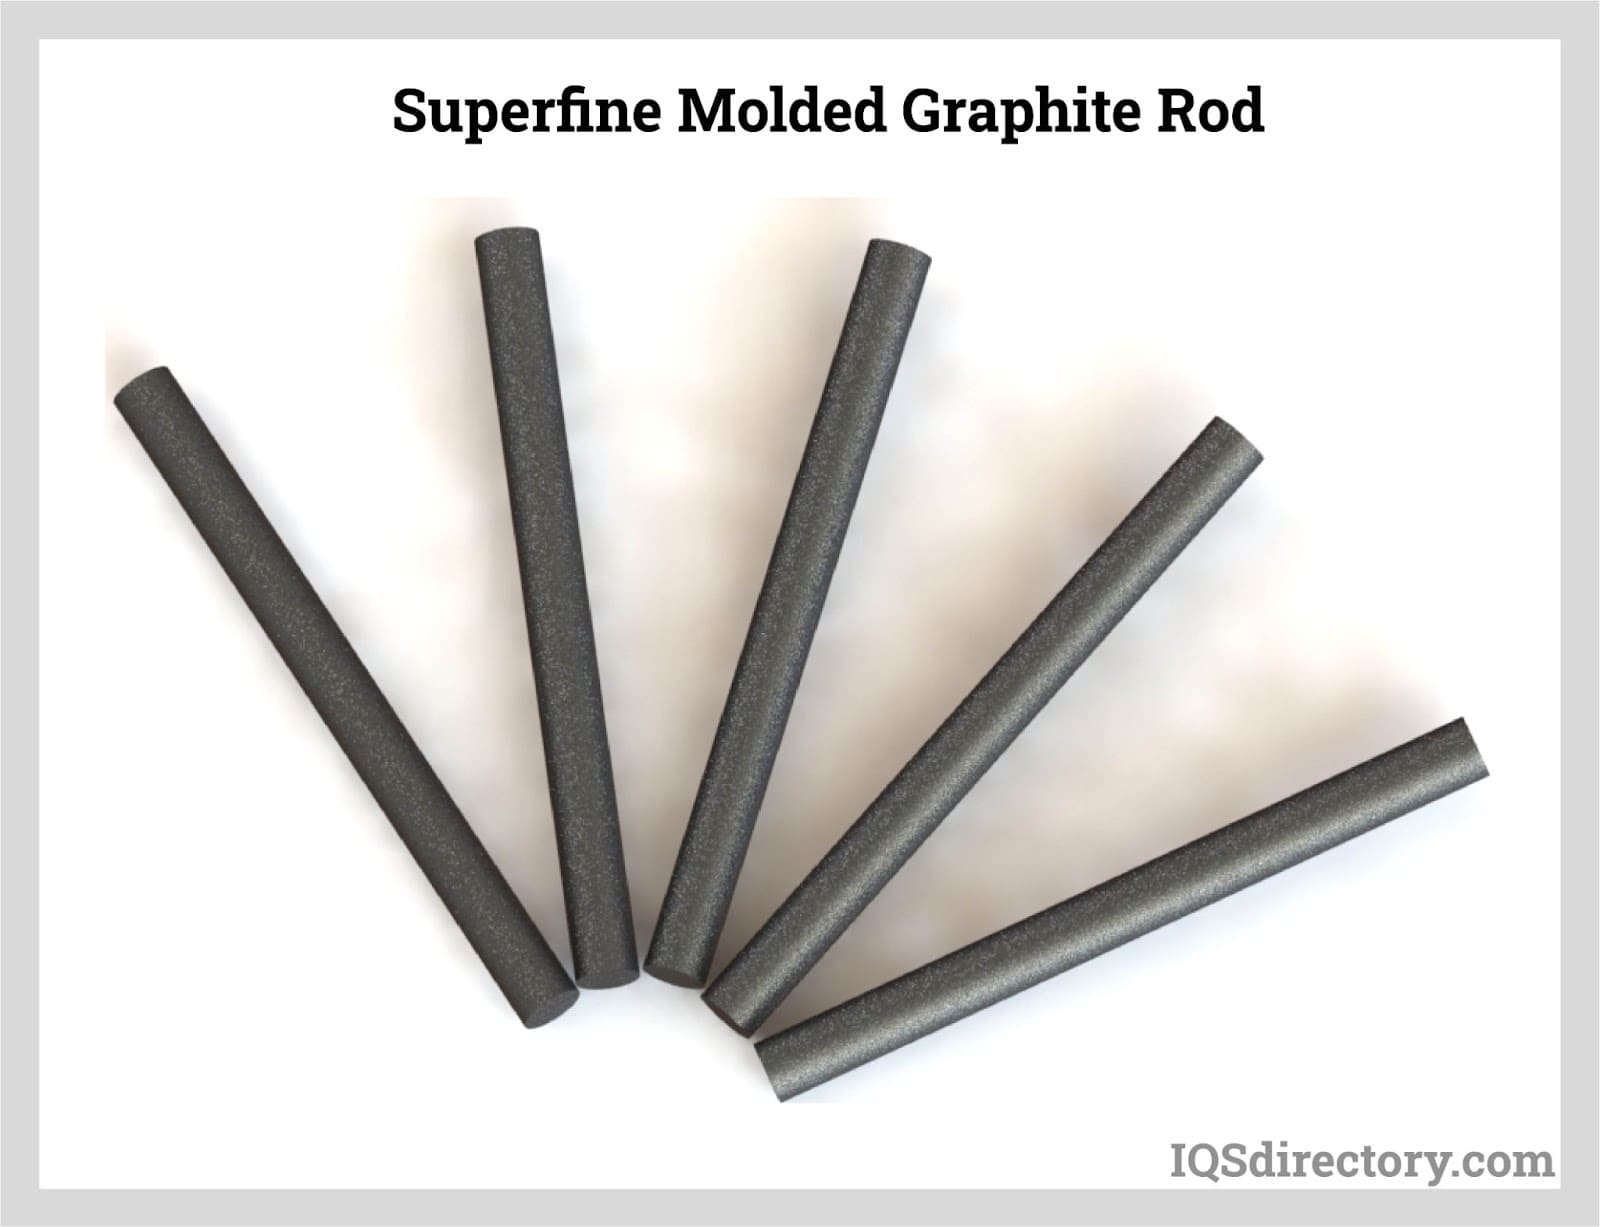 Superfine Molded Graphite Rod